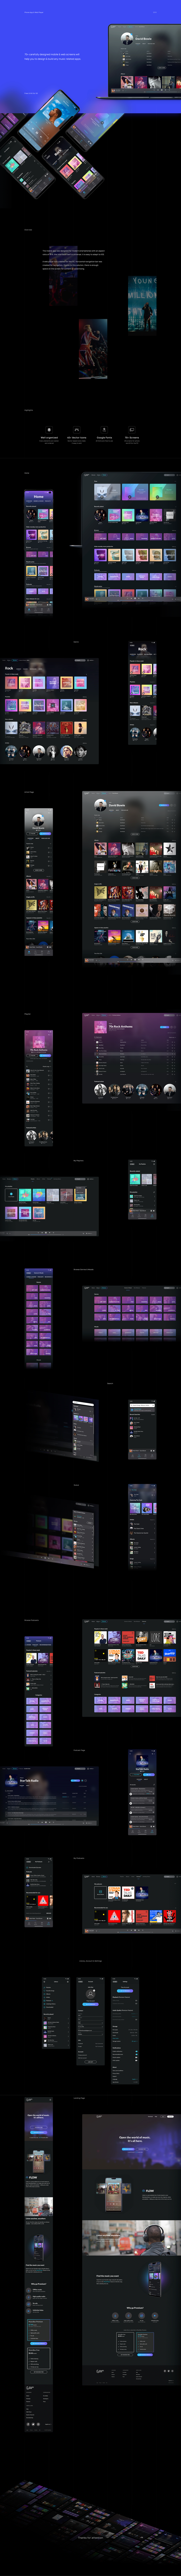 MusicBox Free UI Kit for Adobe XD